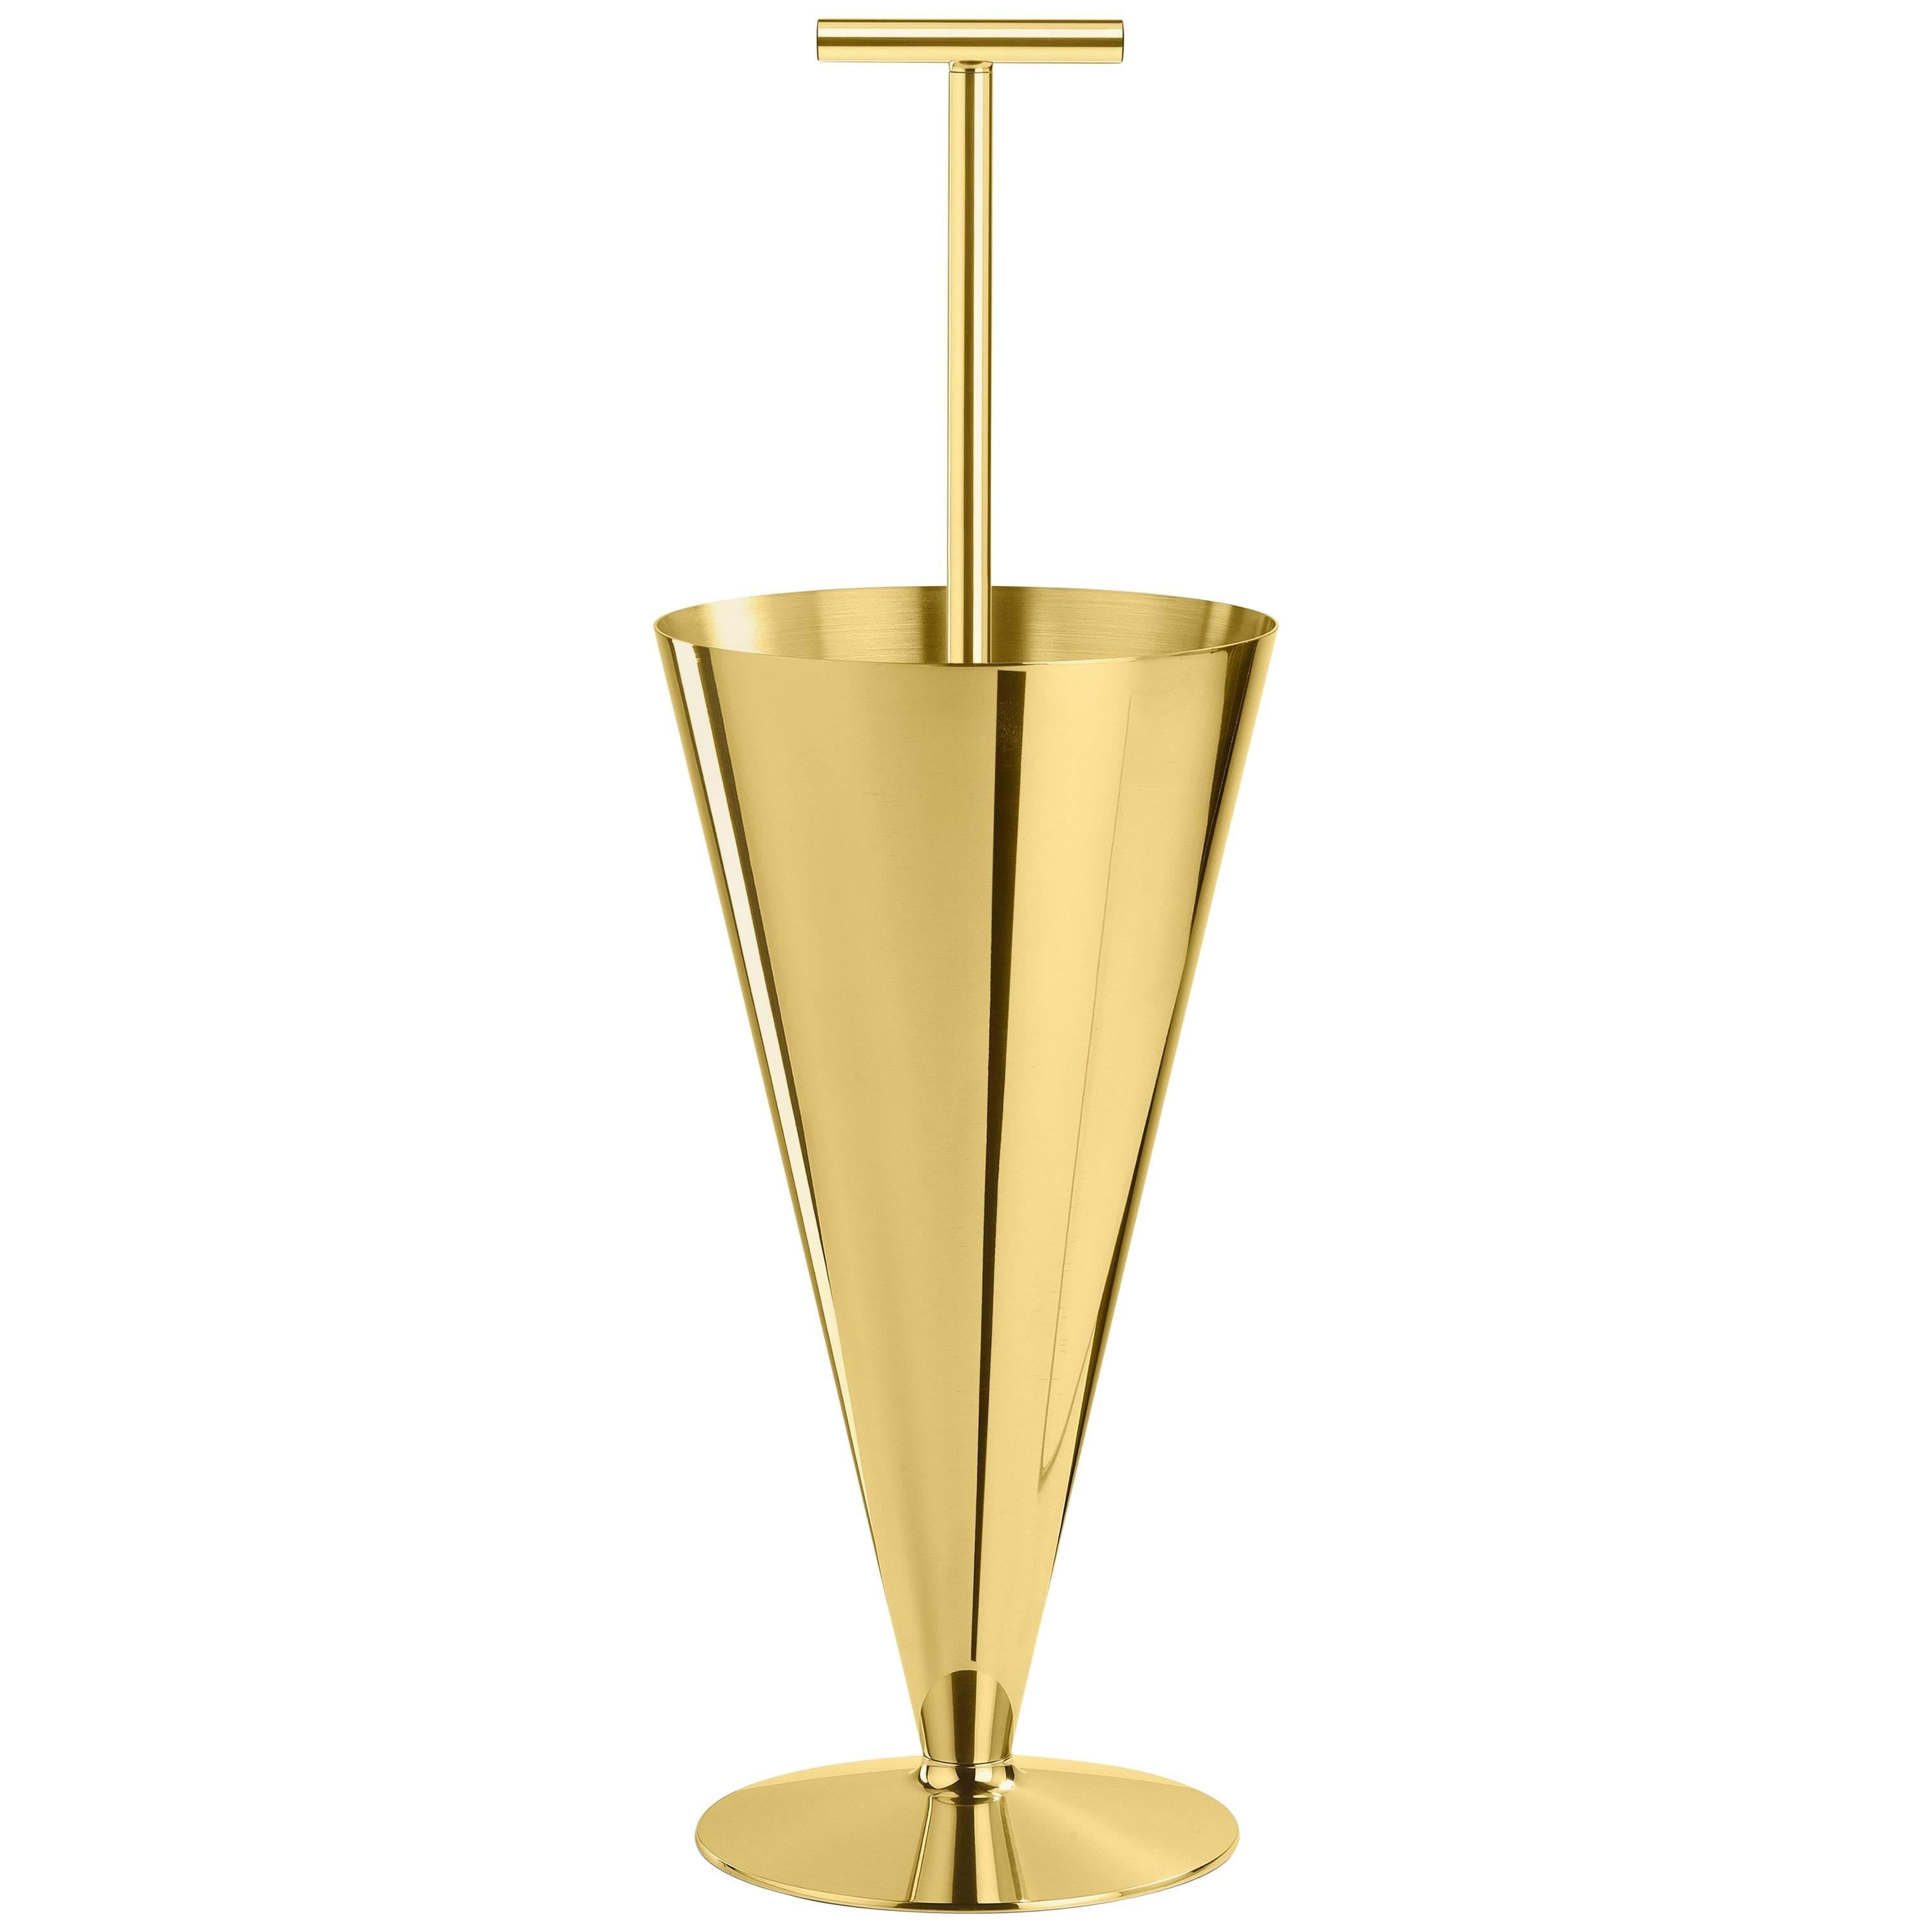 Ghidini 1961 Umbrella Stand in Polished Brass